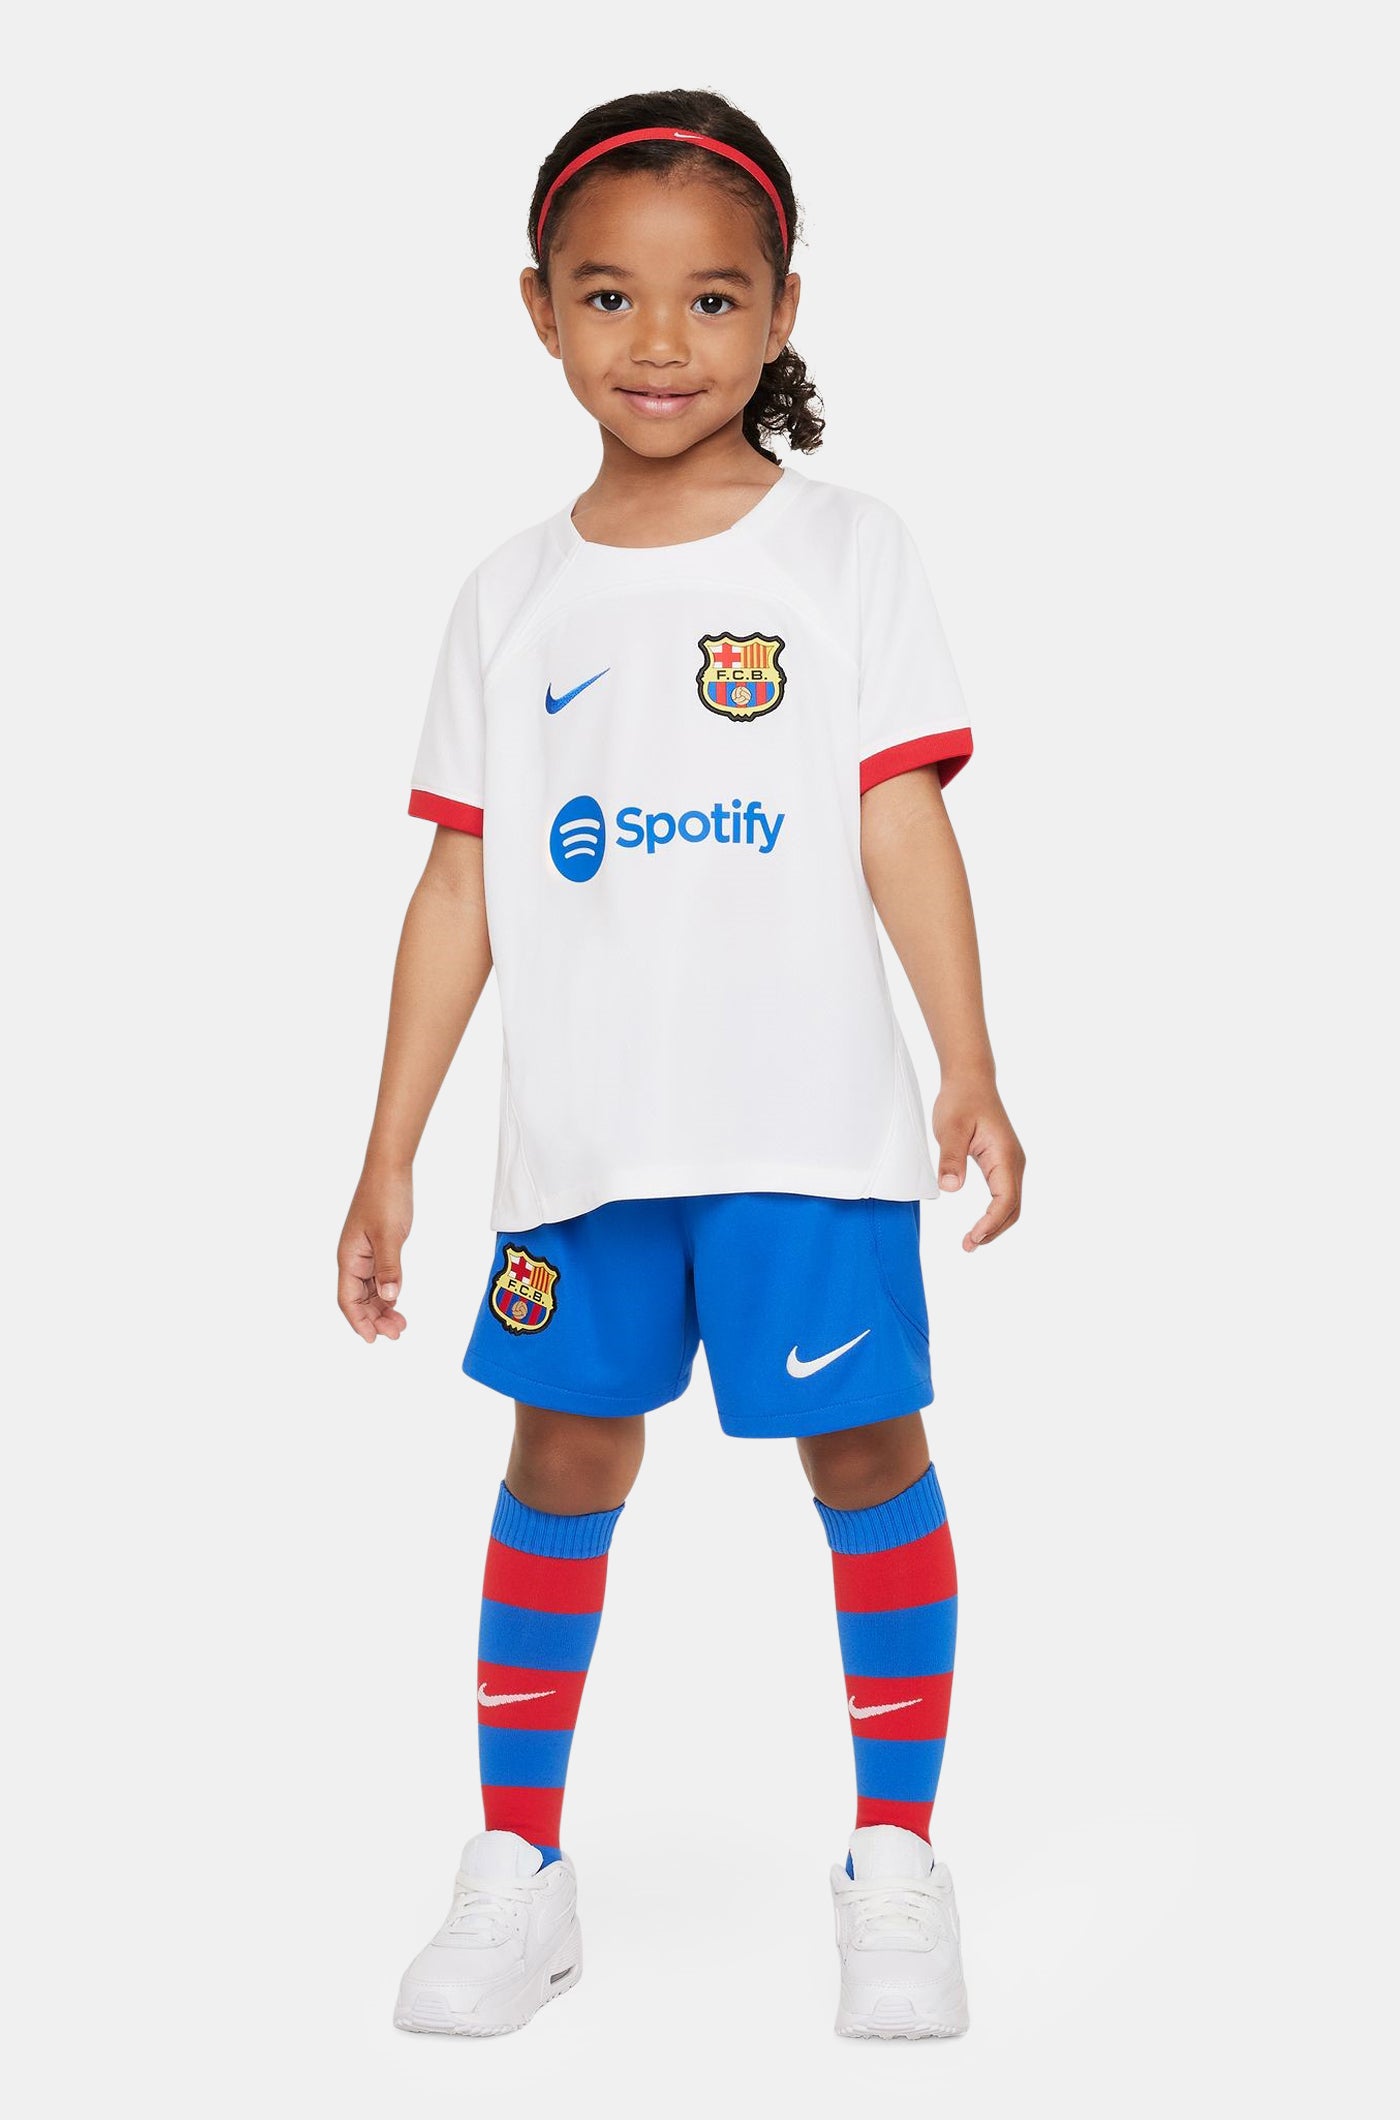 FC Barcelona away Kit 23/24 – Younger Kids  - ROLFÖ